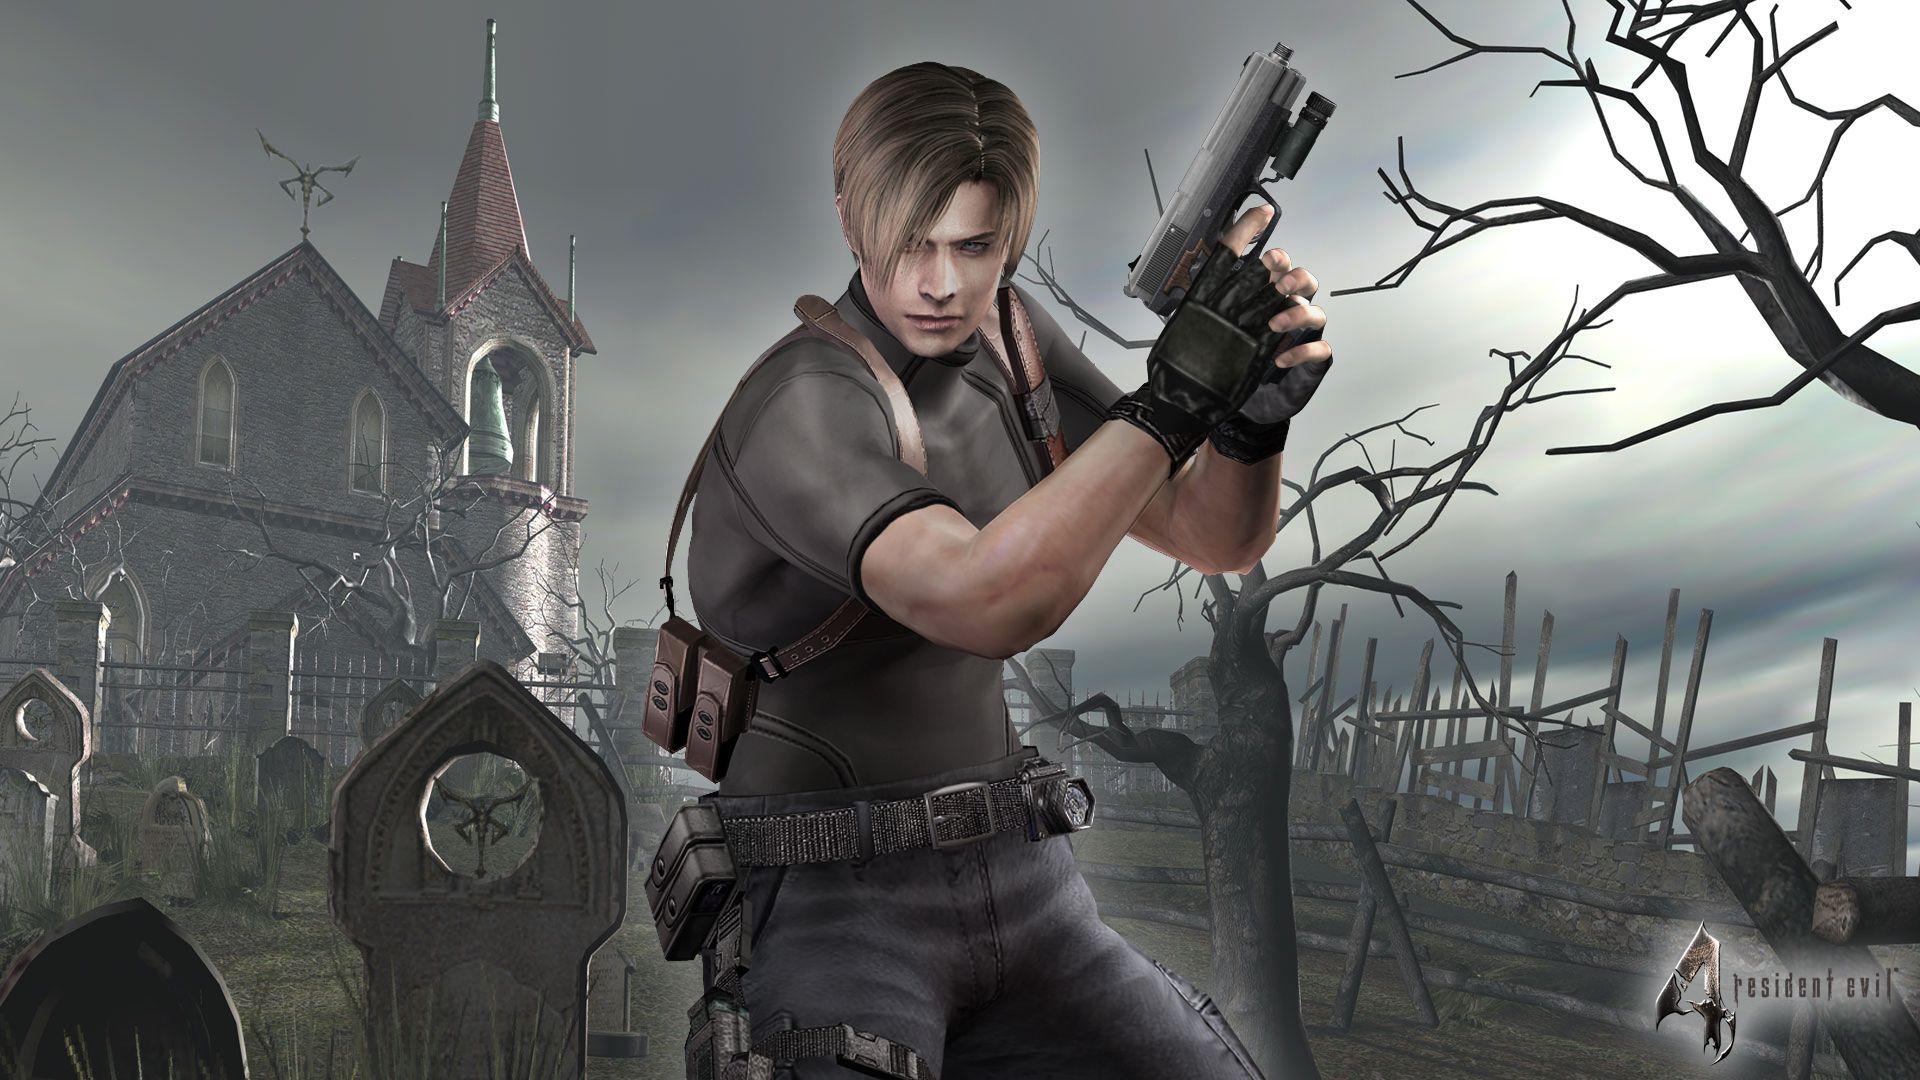 Wallpaper : Resident Evil 4 1920x1080 - Sorby9000beta - 1640631 - HD  Wallpapers - WallHere